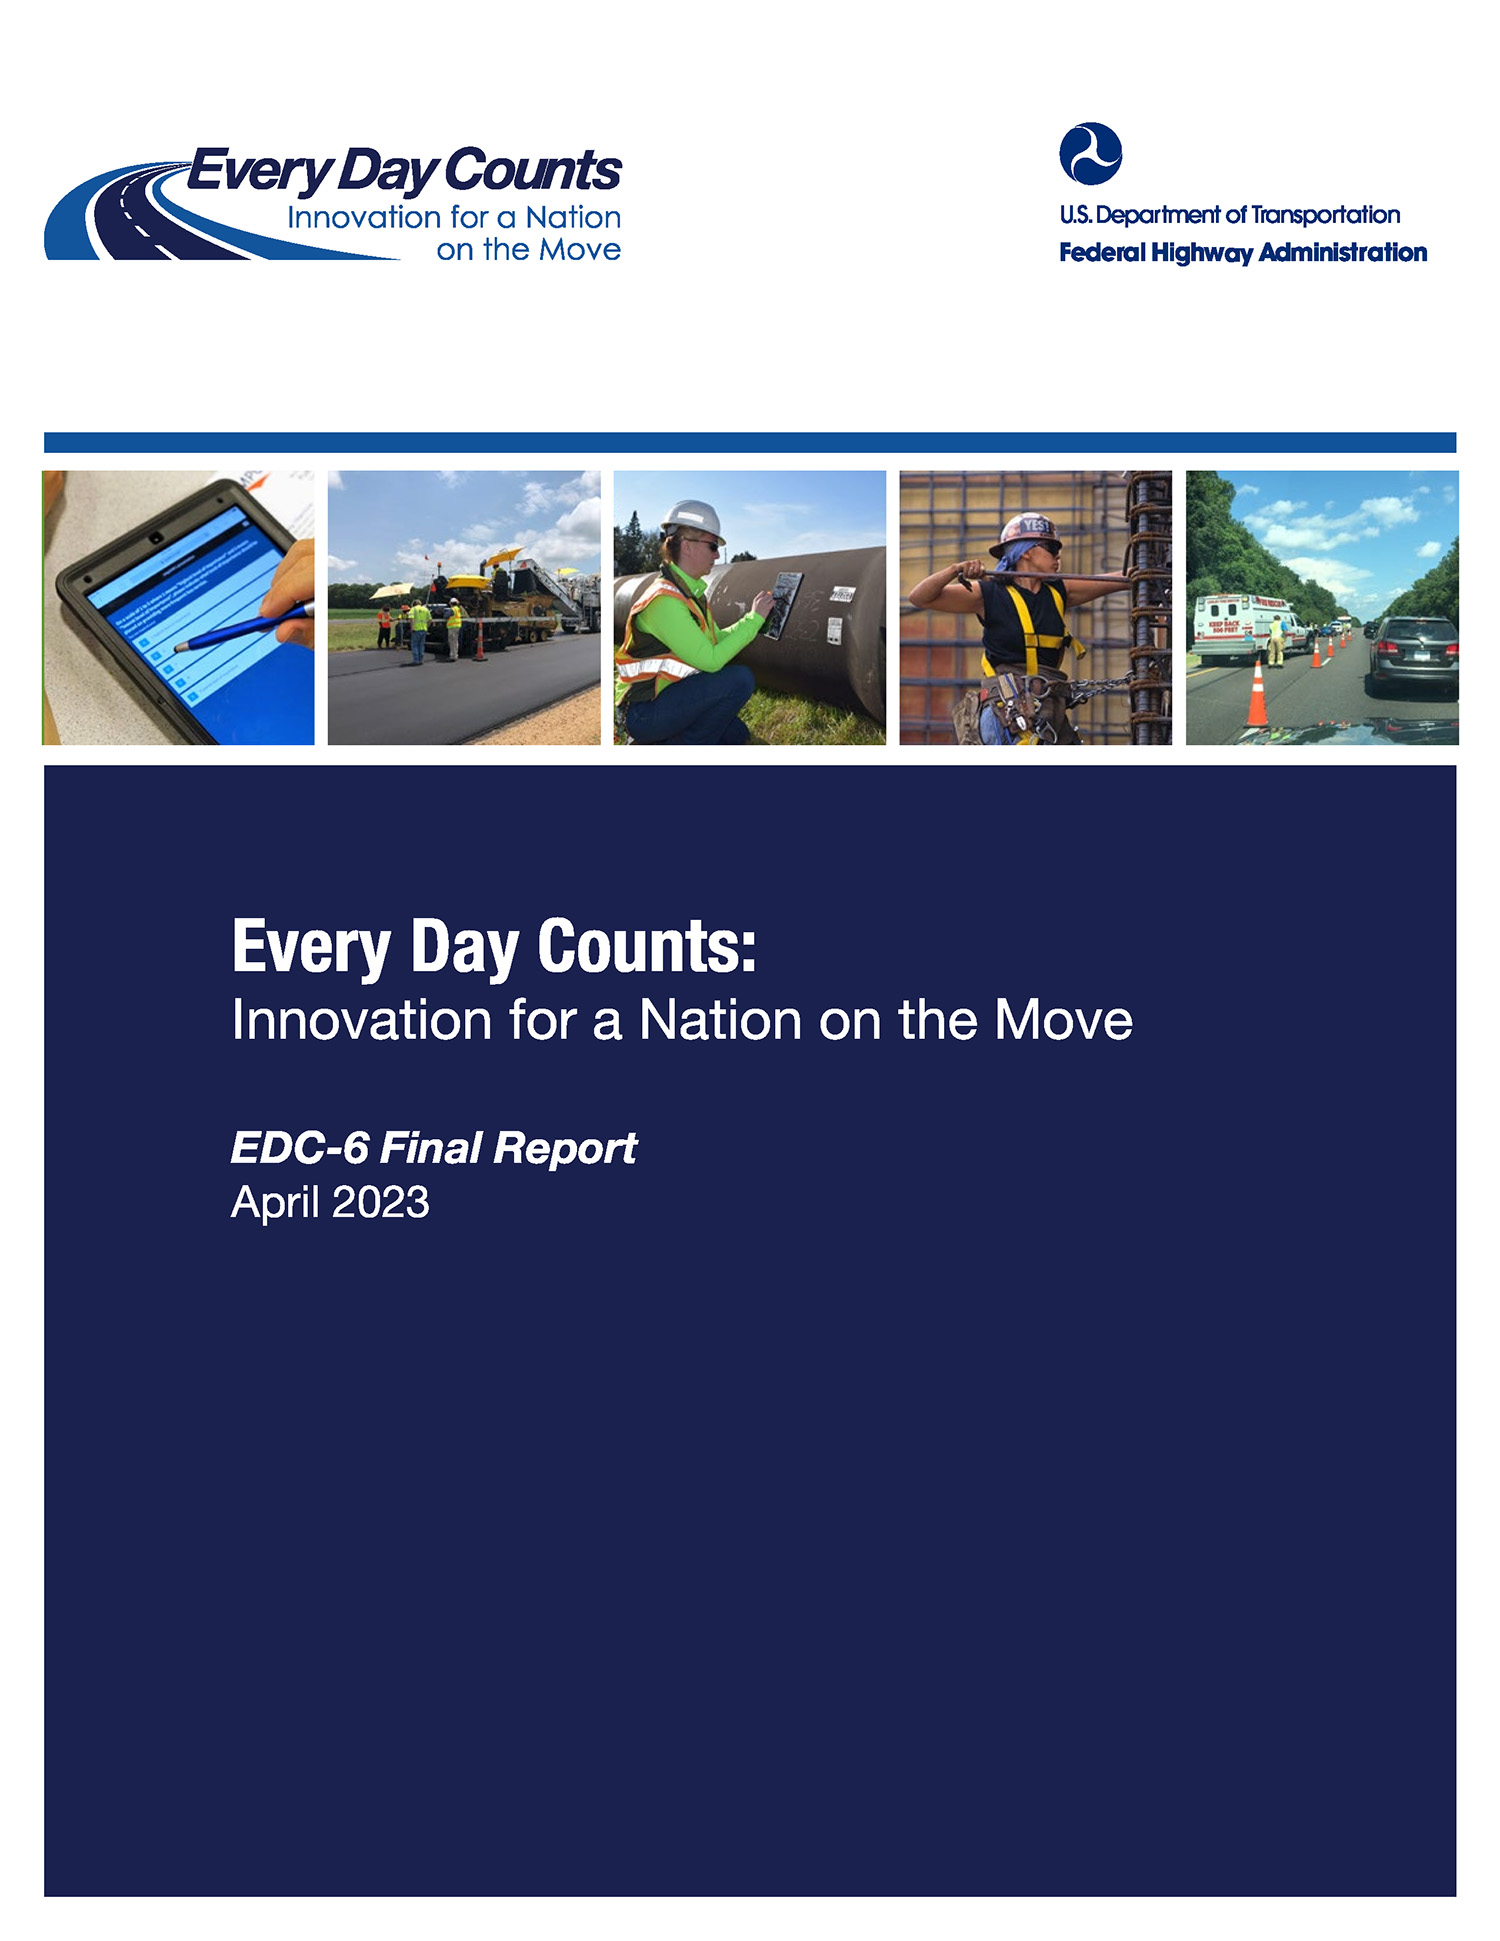 EDC-6 Final Report Cover